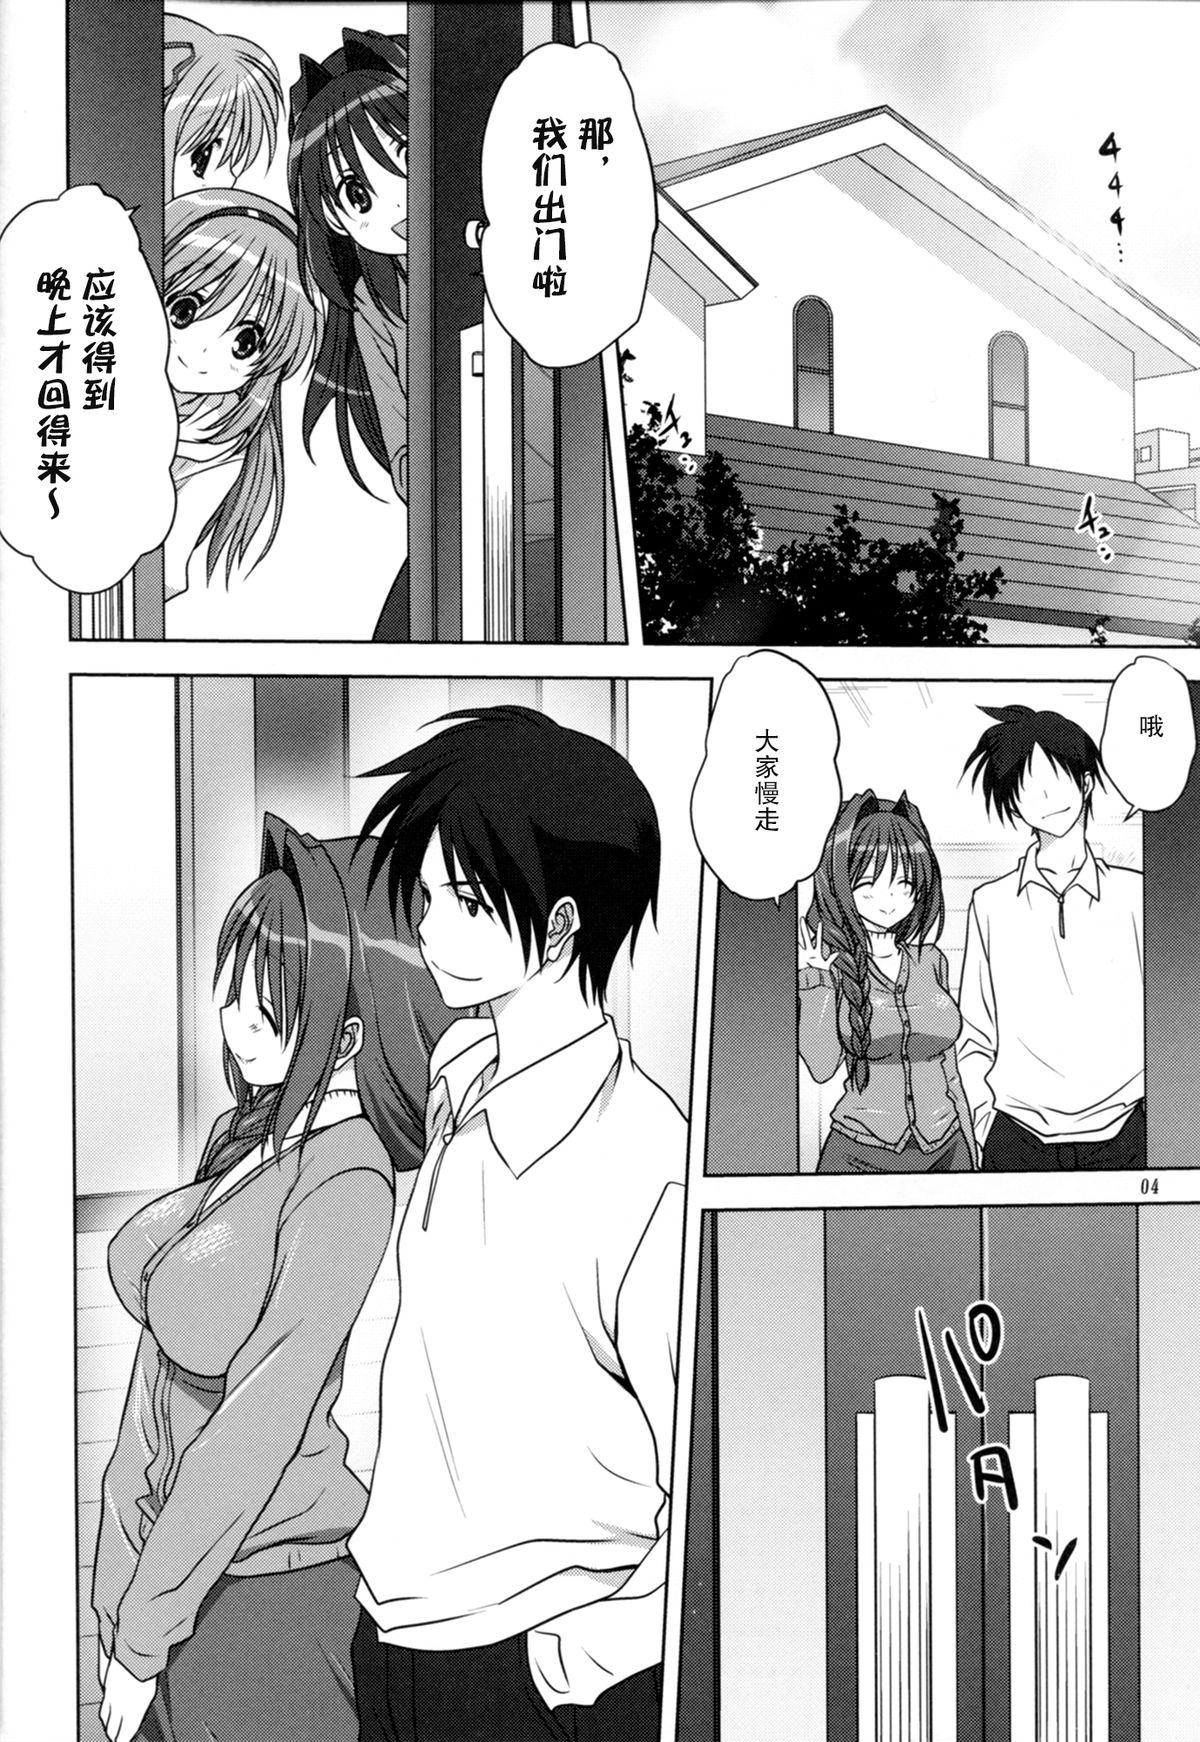 Fake Akiko-san to Issho 14 - Kanon Seduction - Page 4